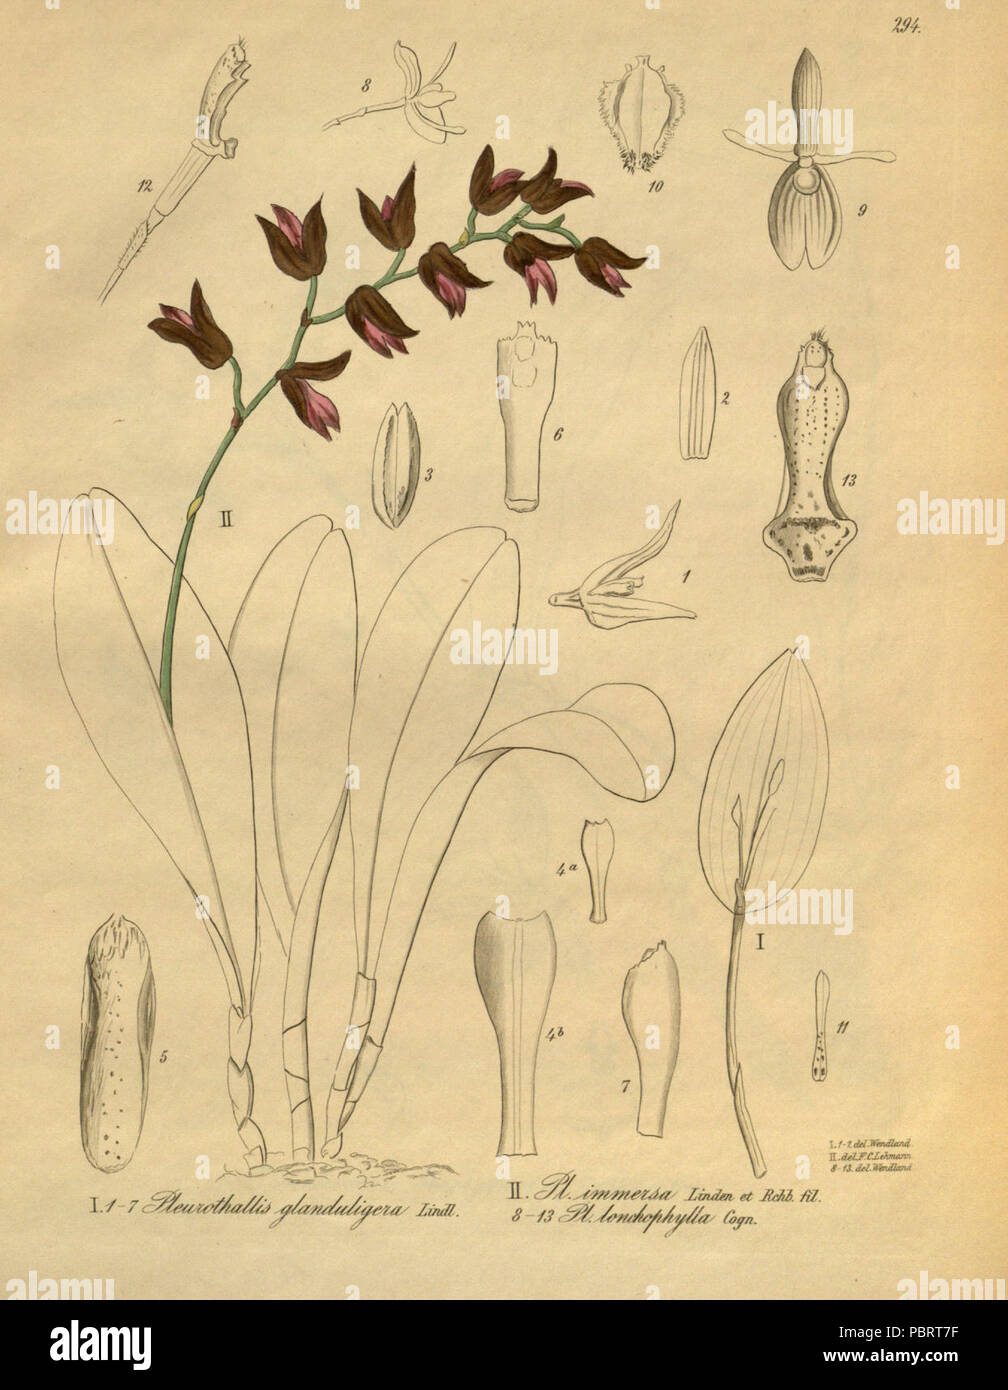 Acianthera glanduligera (as Pleurothallis glanduligera) - Stelis immersa (as Pl. immersa) - Myoxanthus lonchophyllus (as Pl. lonchofila) -Xenia 3-294 (1900). Stock Photo